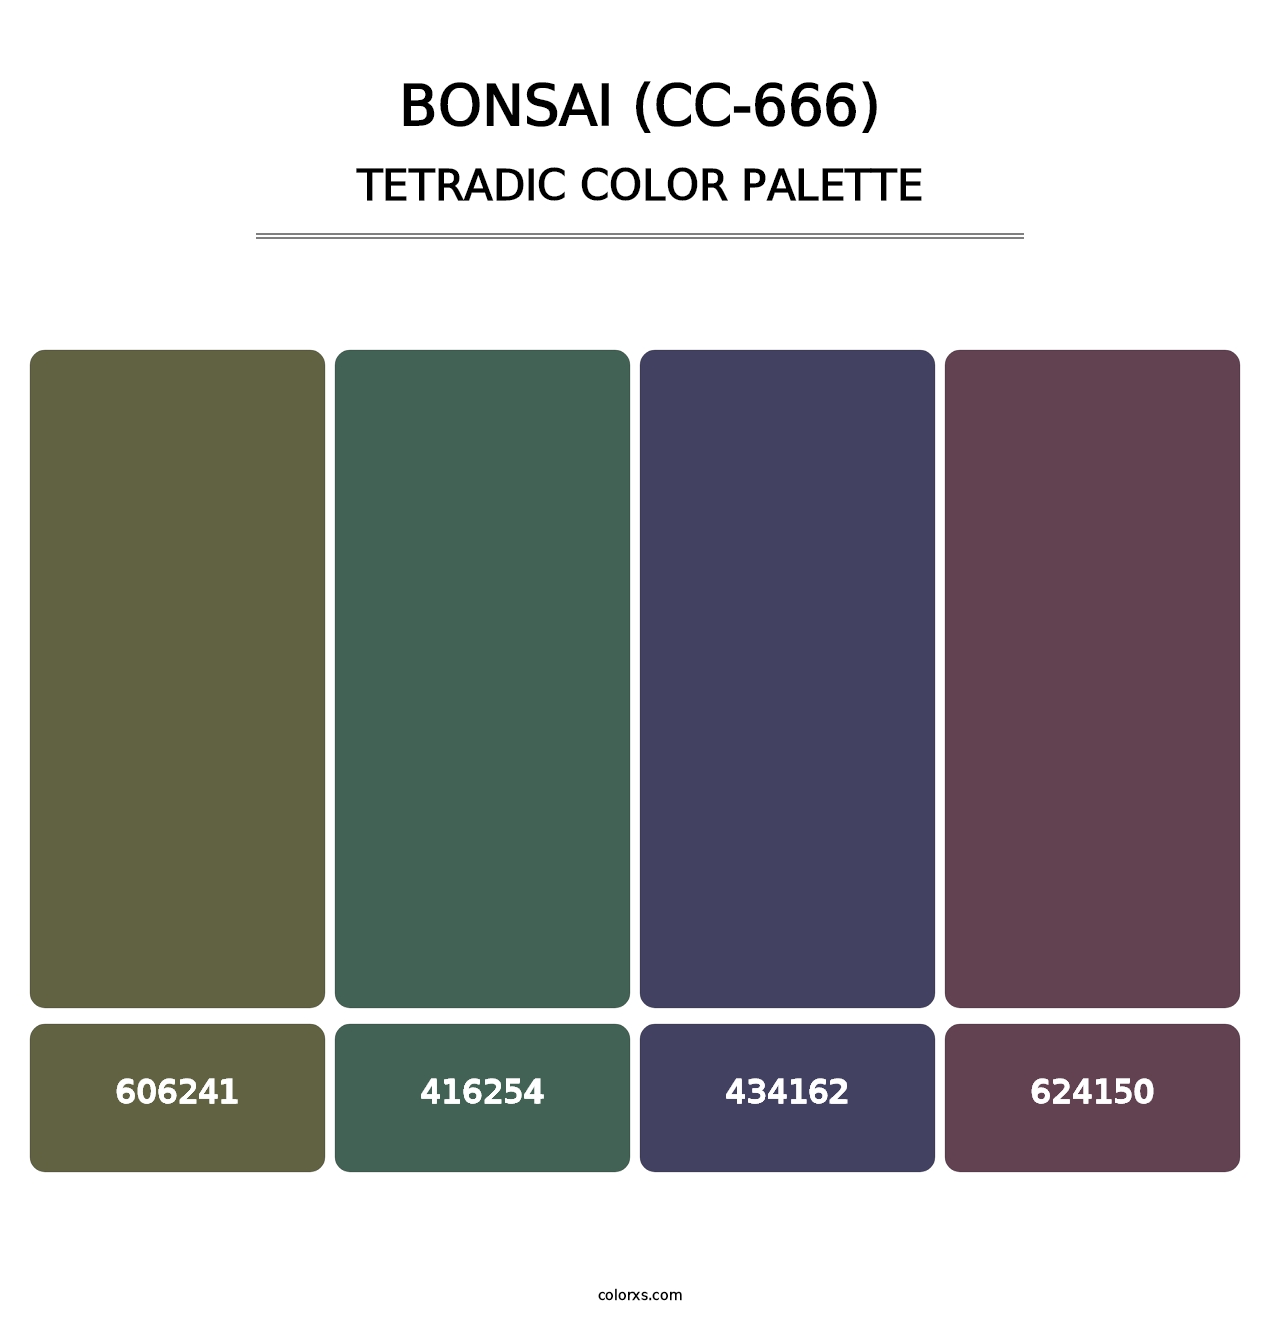 Bonsai (CC-666) - Tetradic Color Palette